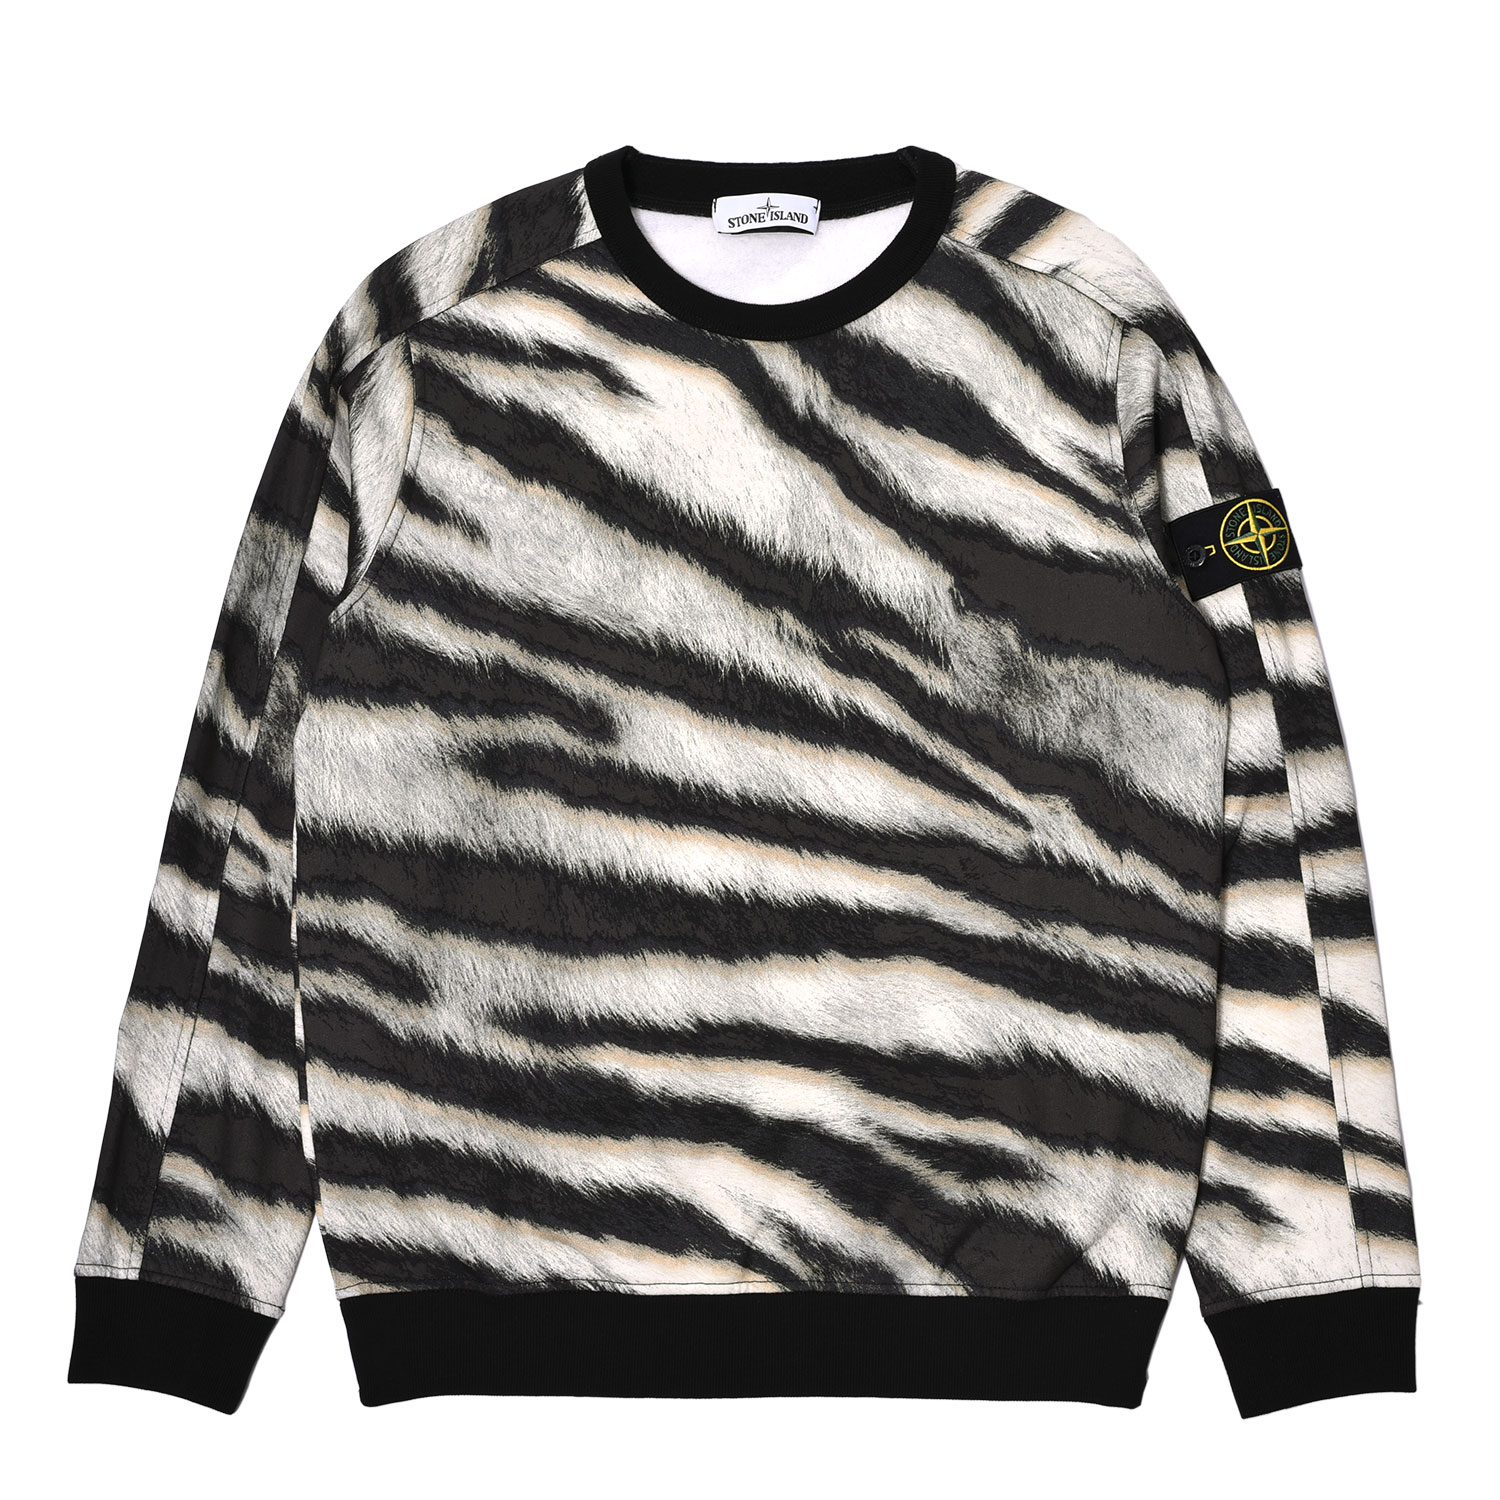 stone island tiger sweatshirt